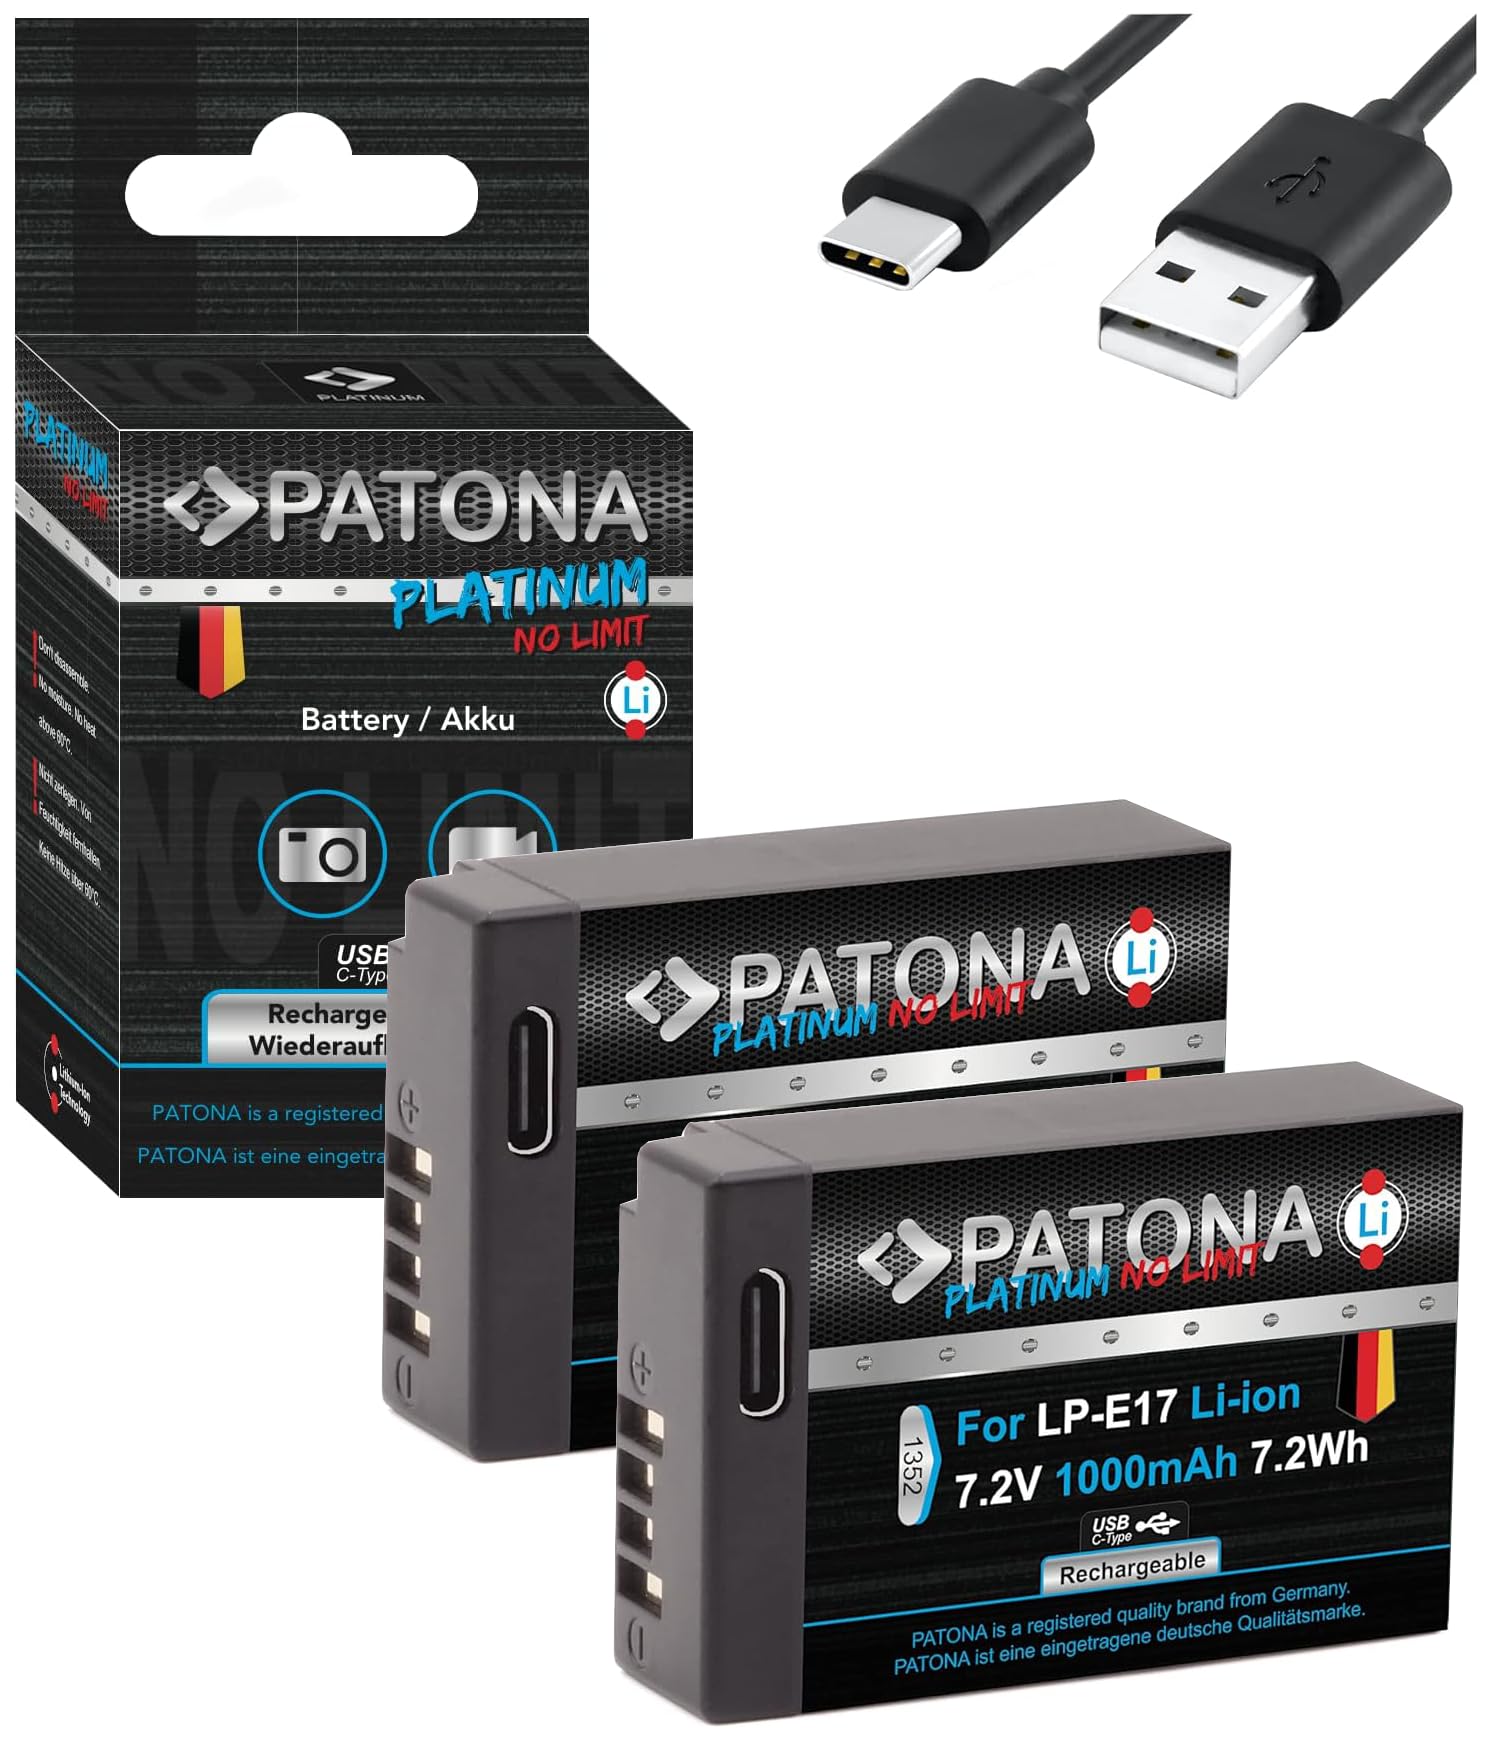 PATONA Platinum LP-E17 USB Akkus (2X 1000 mAh) mit direkt USB Eingang - Kompatibel mit Canon EOS RP R10 R100 77D 200D 250D 750D 760D 800D